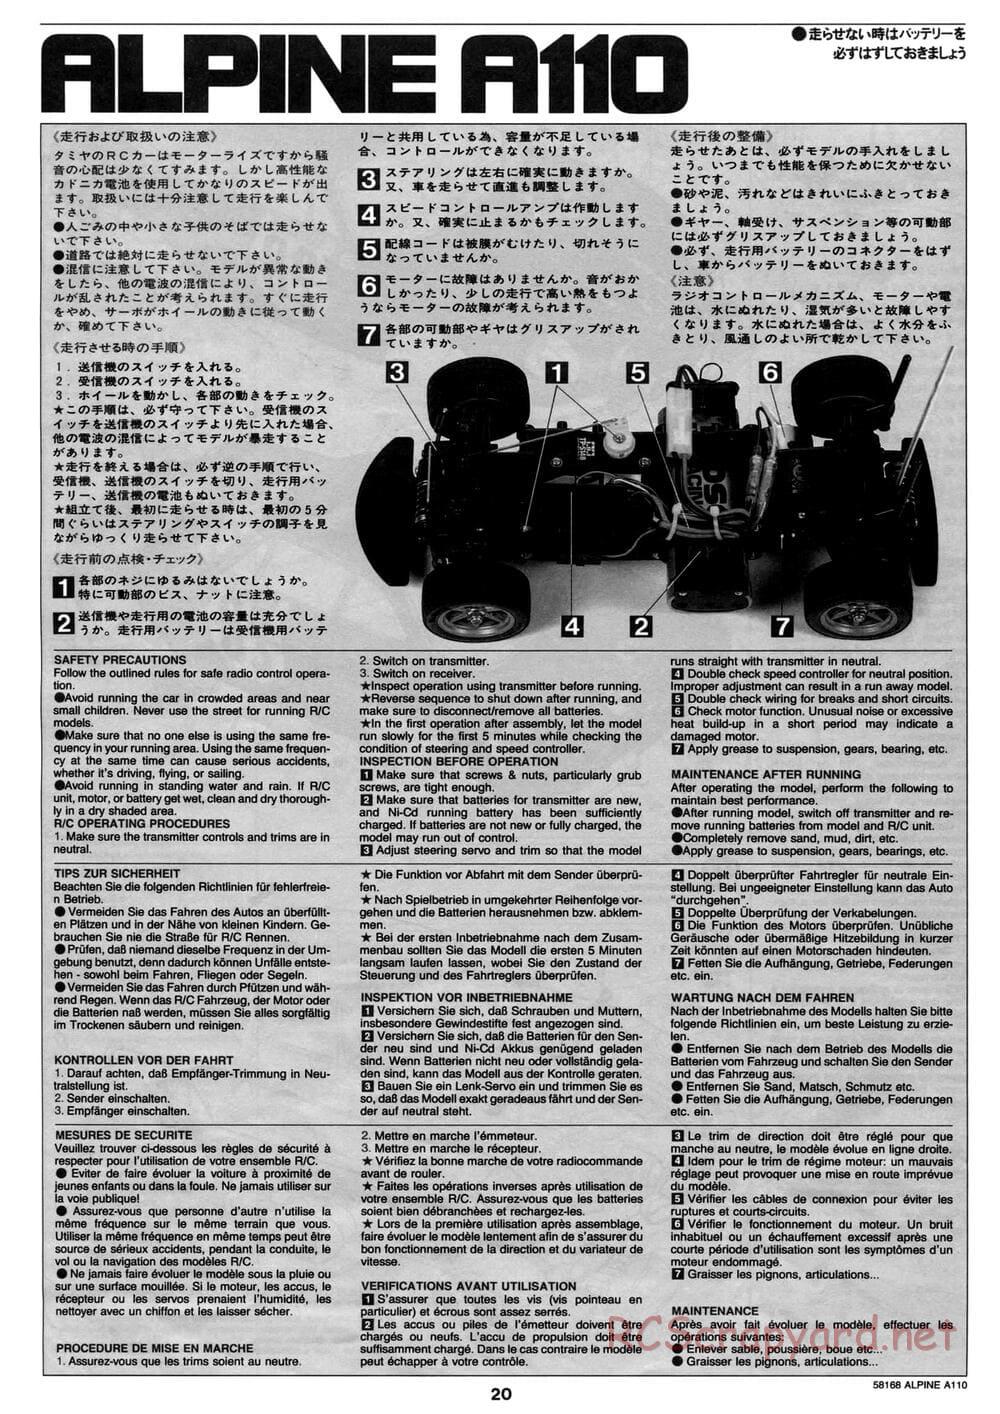 Tamiya - Alpine A110 - M02 Chassis - Manual - Page 20